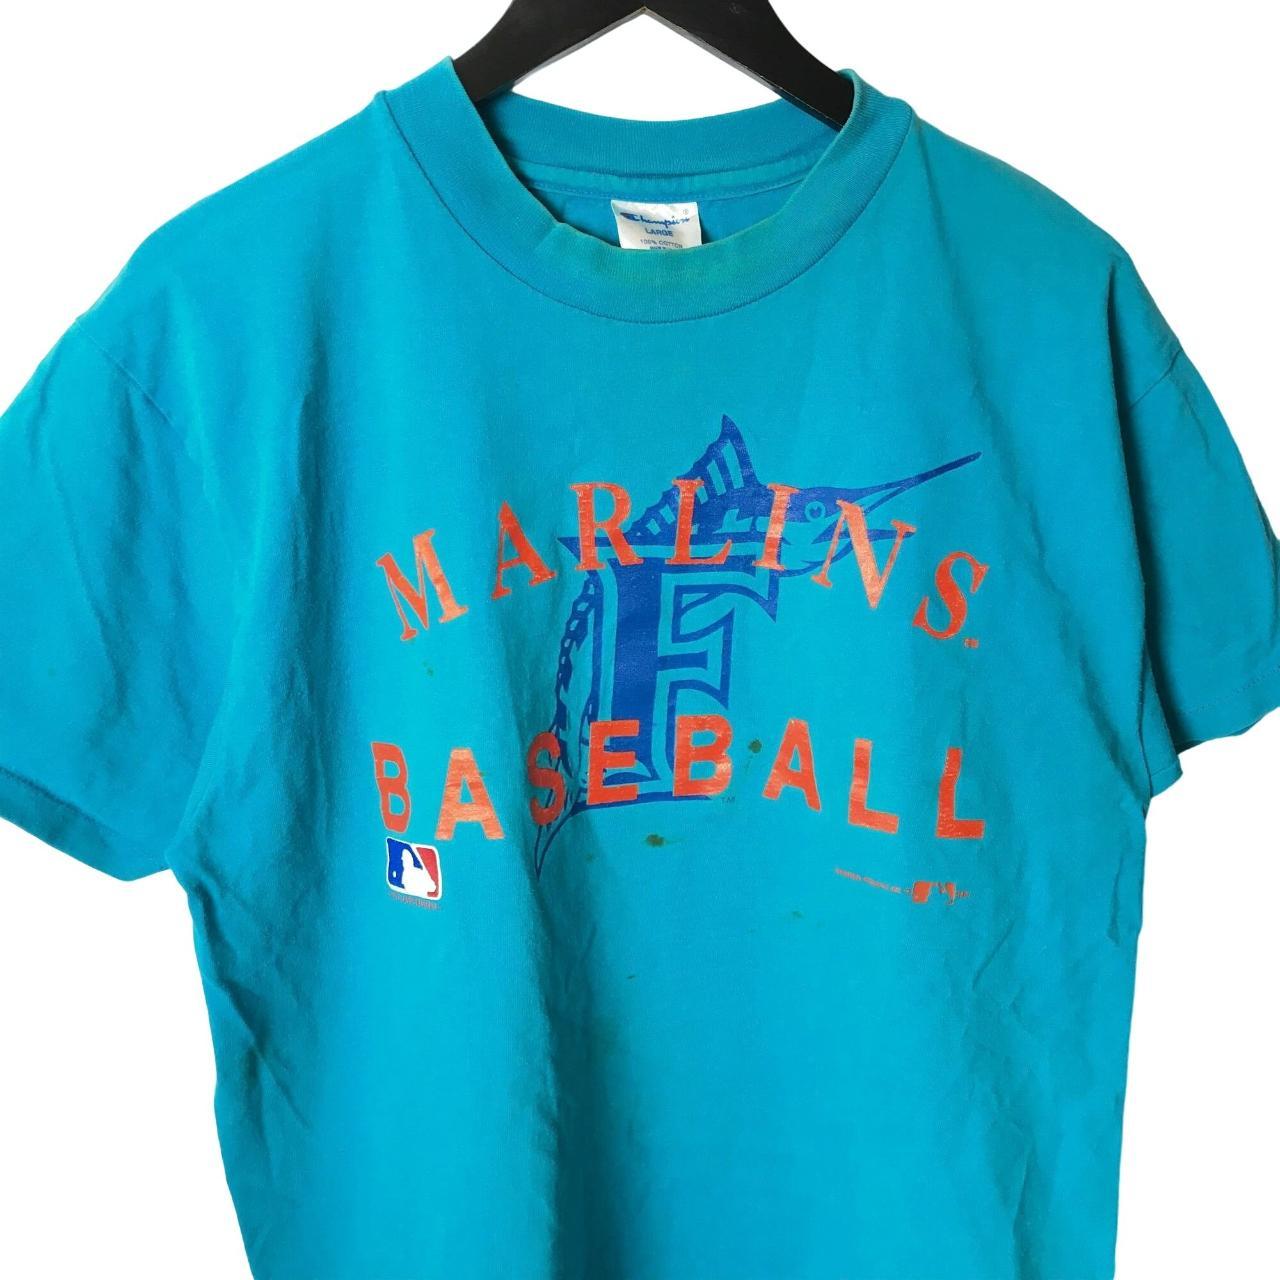 Vintage 1994 MLB Florida Marlins Baseball Jersey - Depop